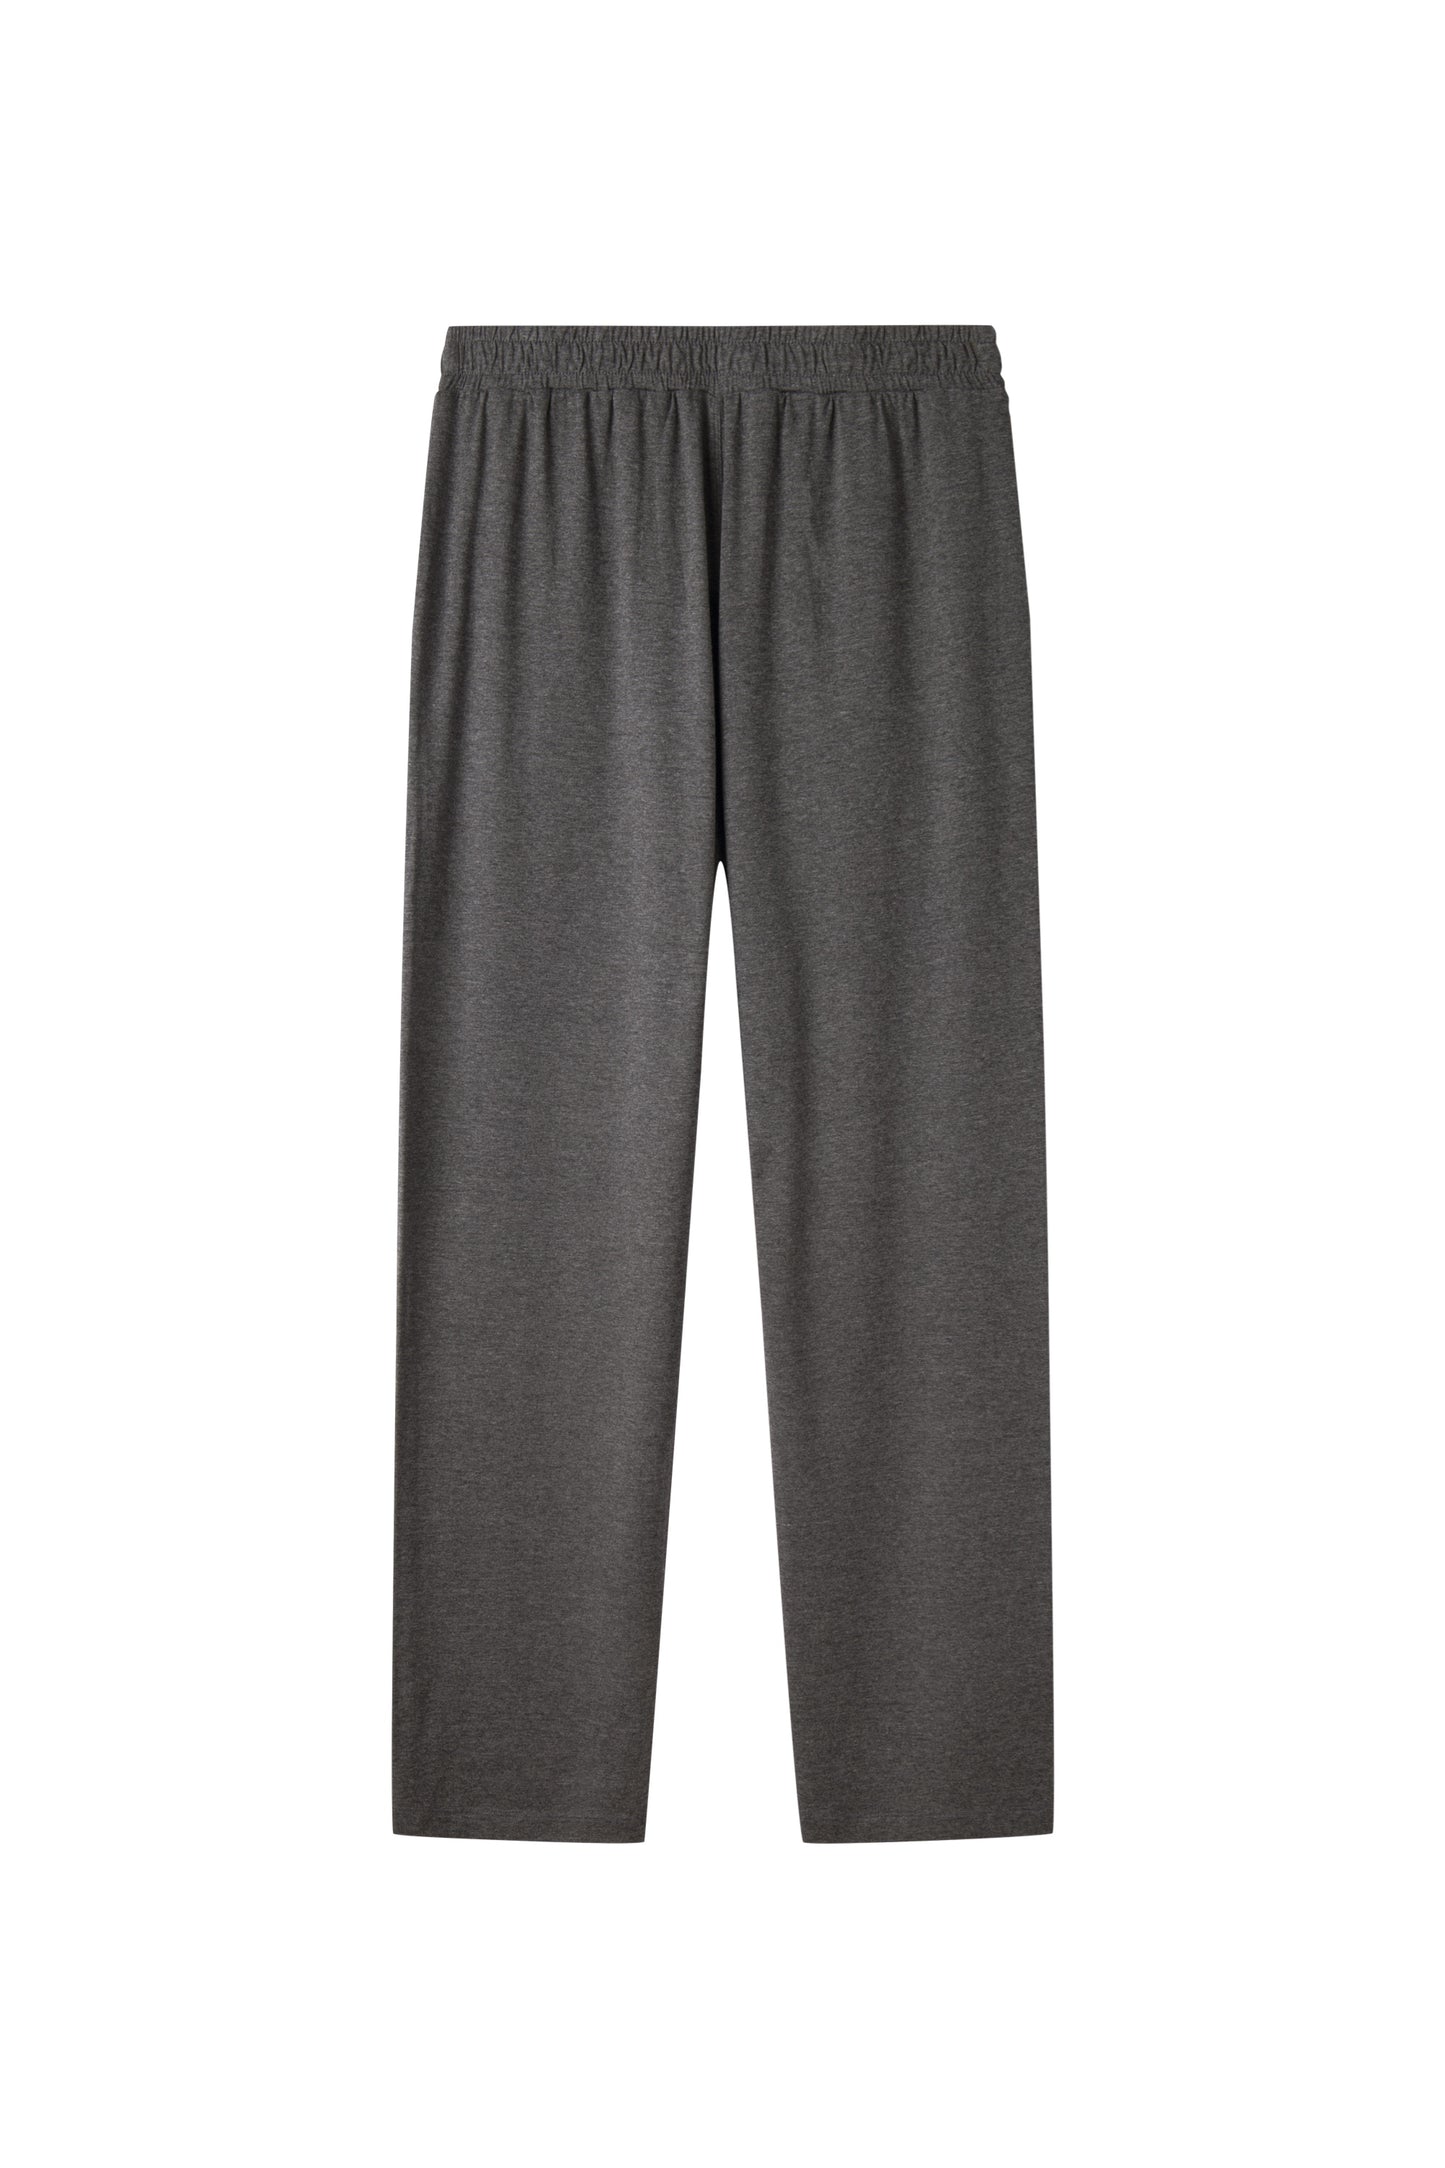 Hackett x Wellwear Premium Pyjama Pant